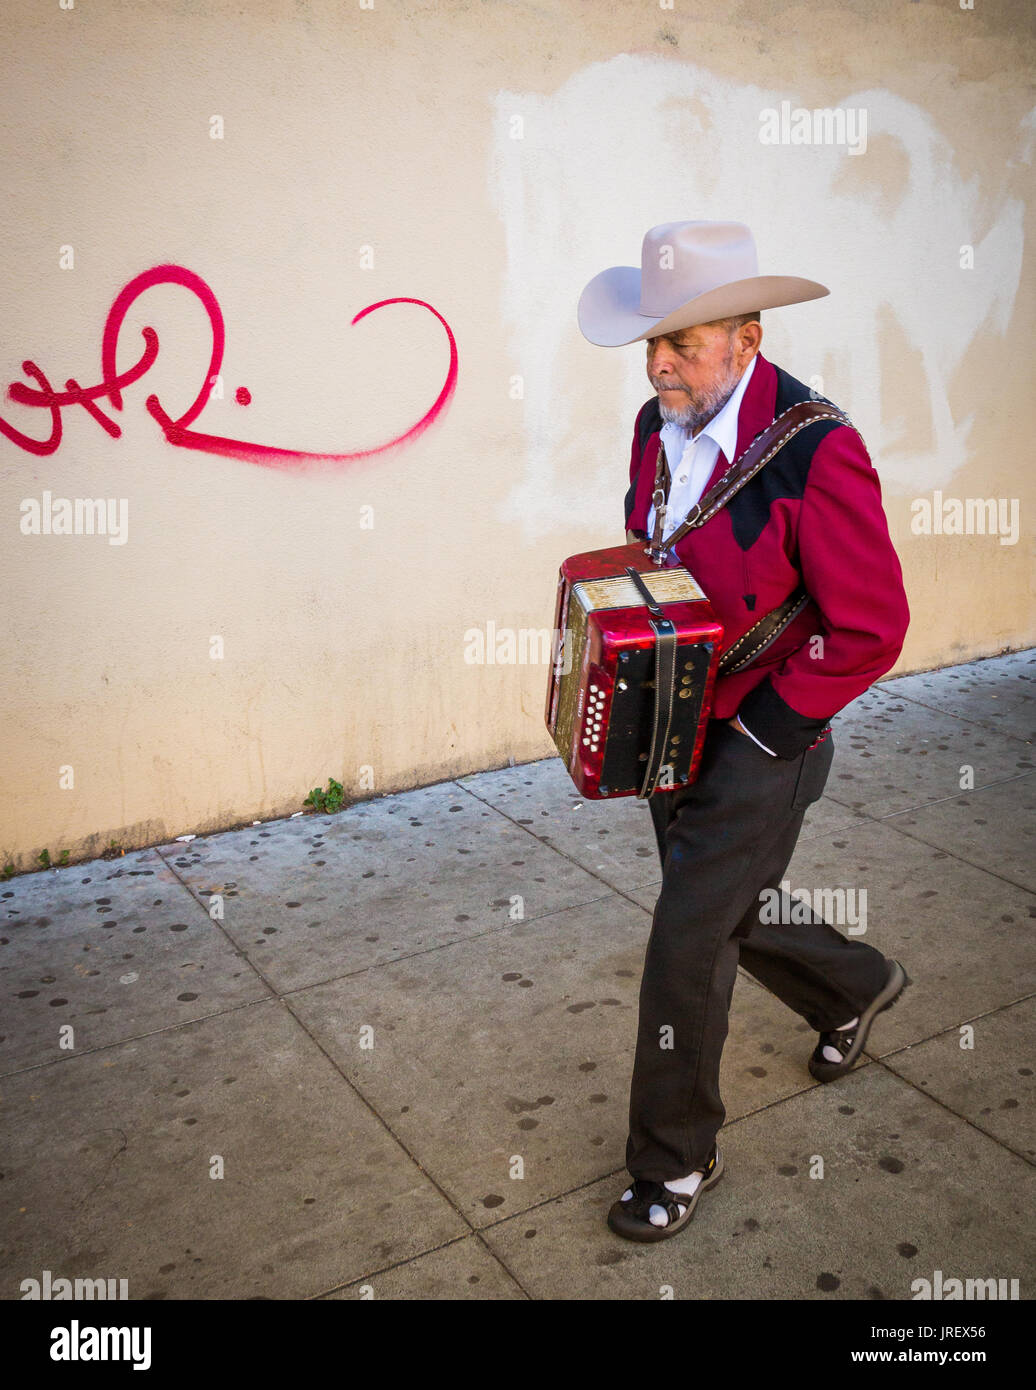 Accordion player walking along Mission Street in San Francisco, California. Stock Photo